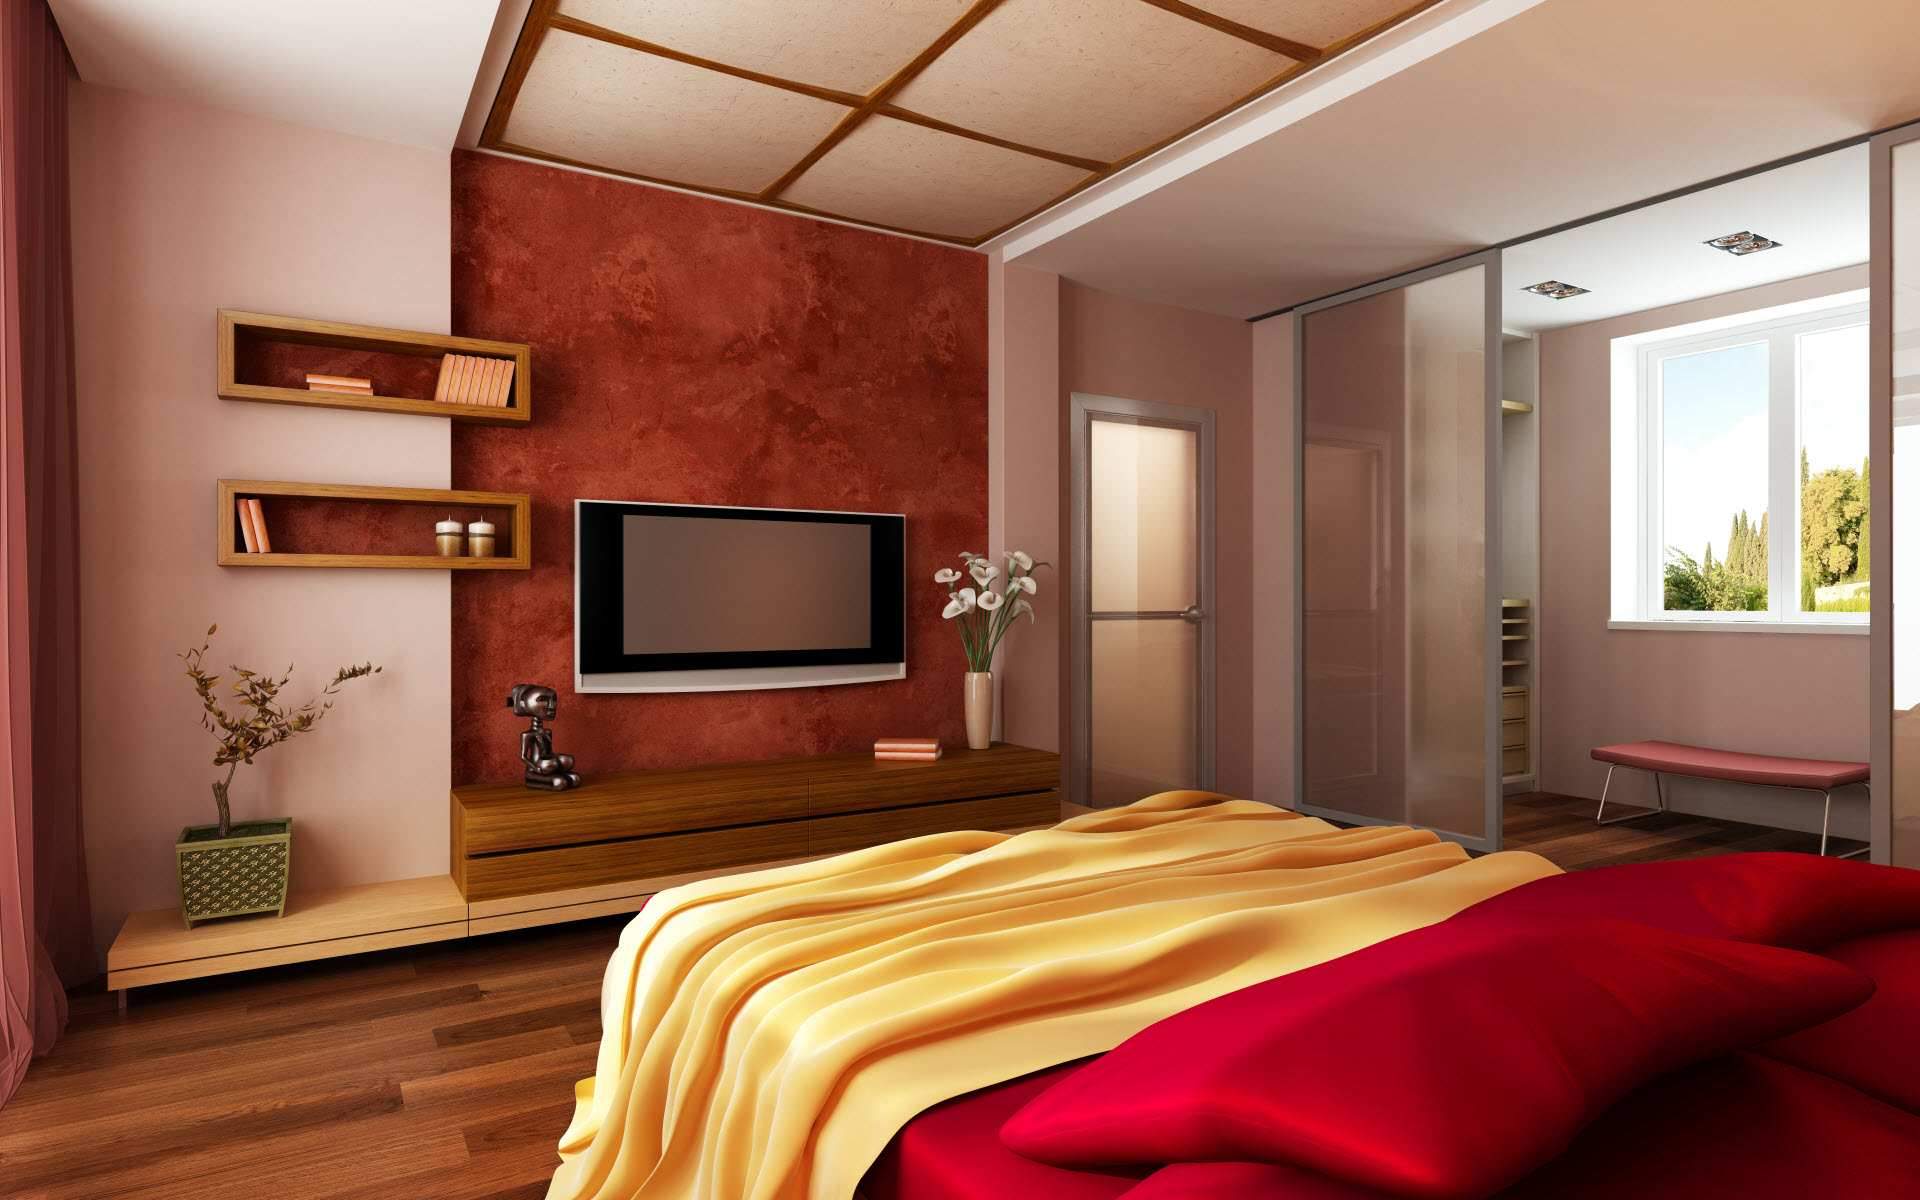 Luxury-Bed-Room-Home-Interior-Design-Ideas22